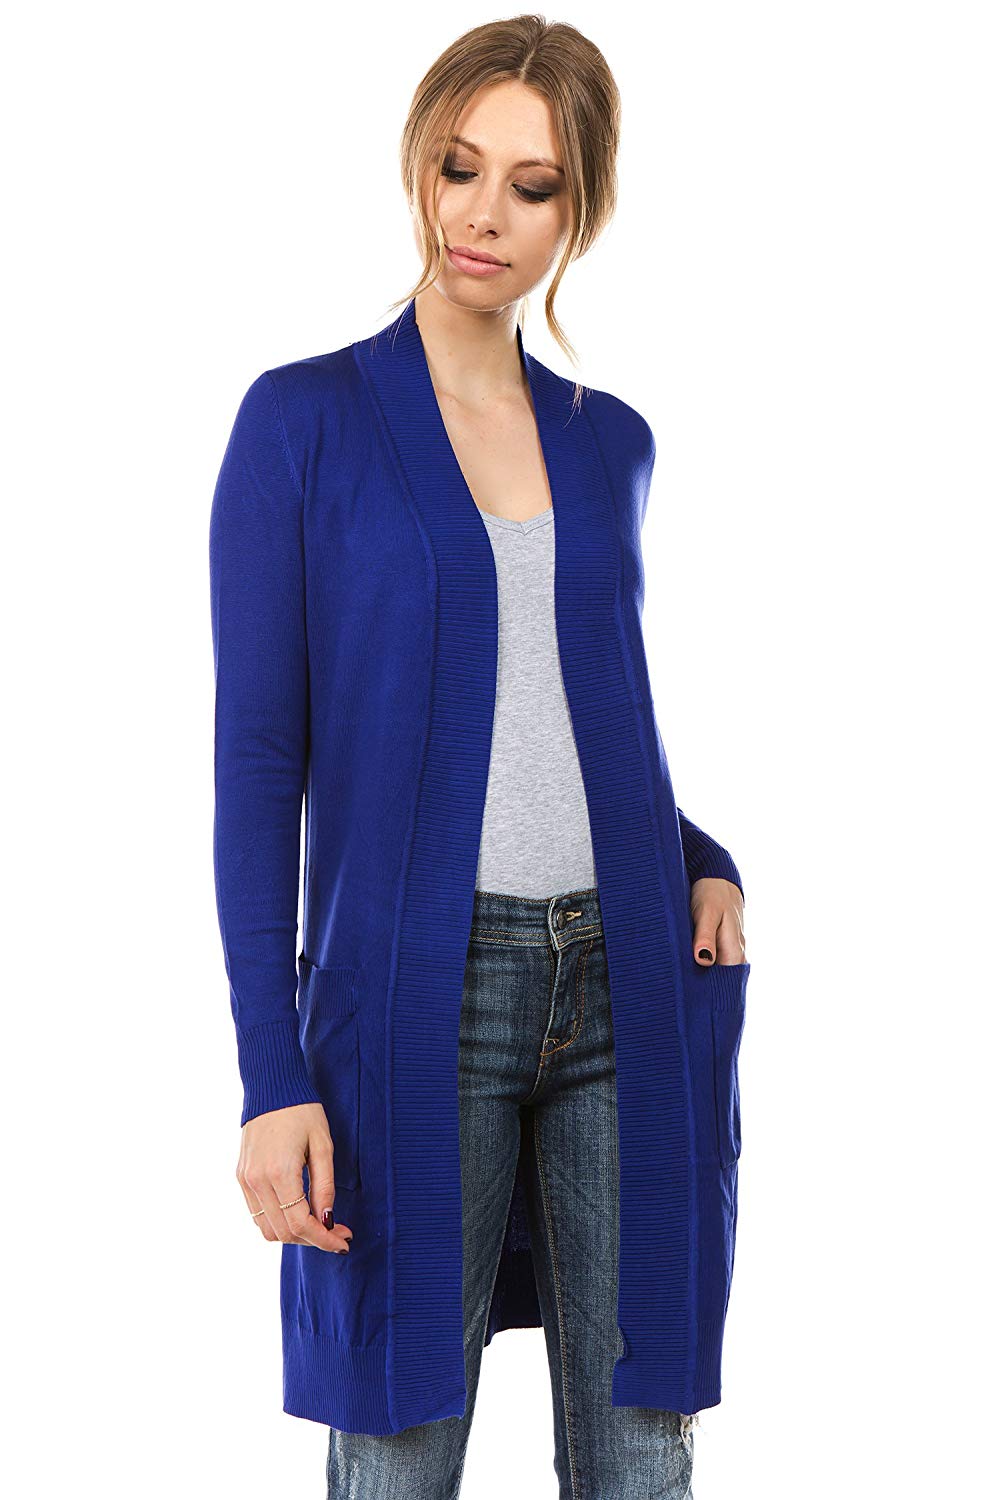 Online from royal blue duster sweater jacket women online cheap